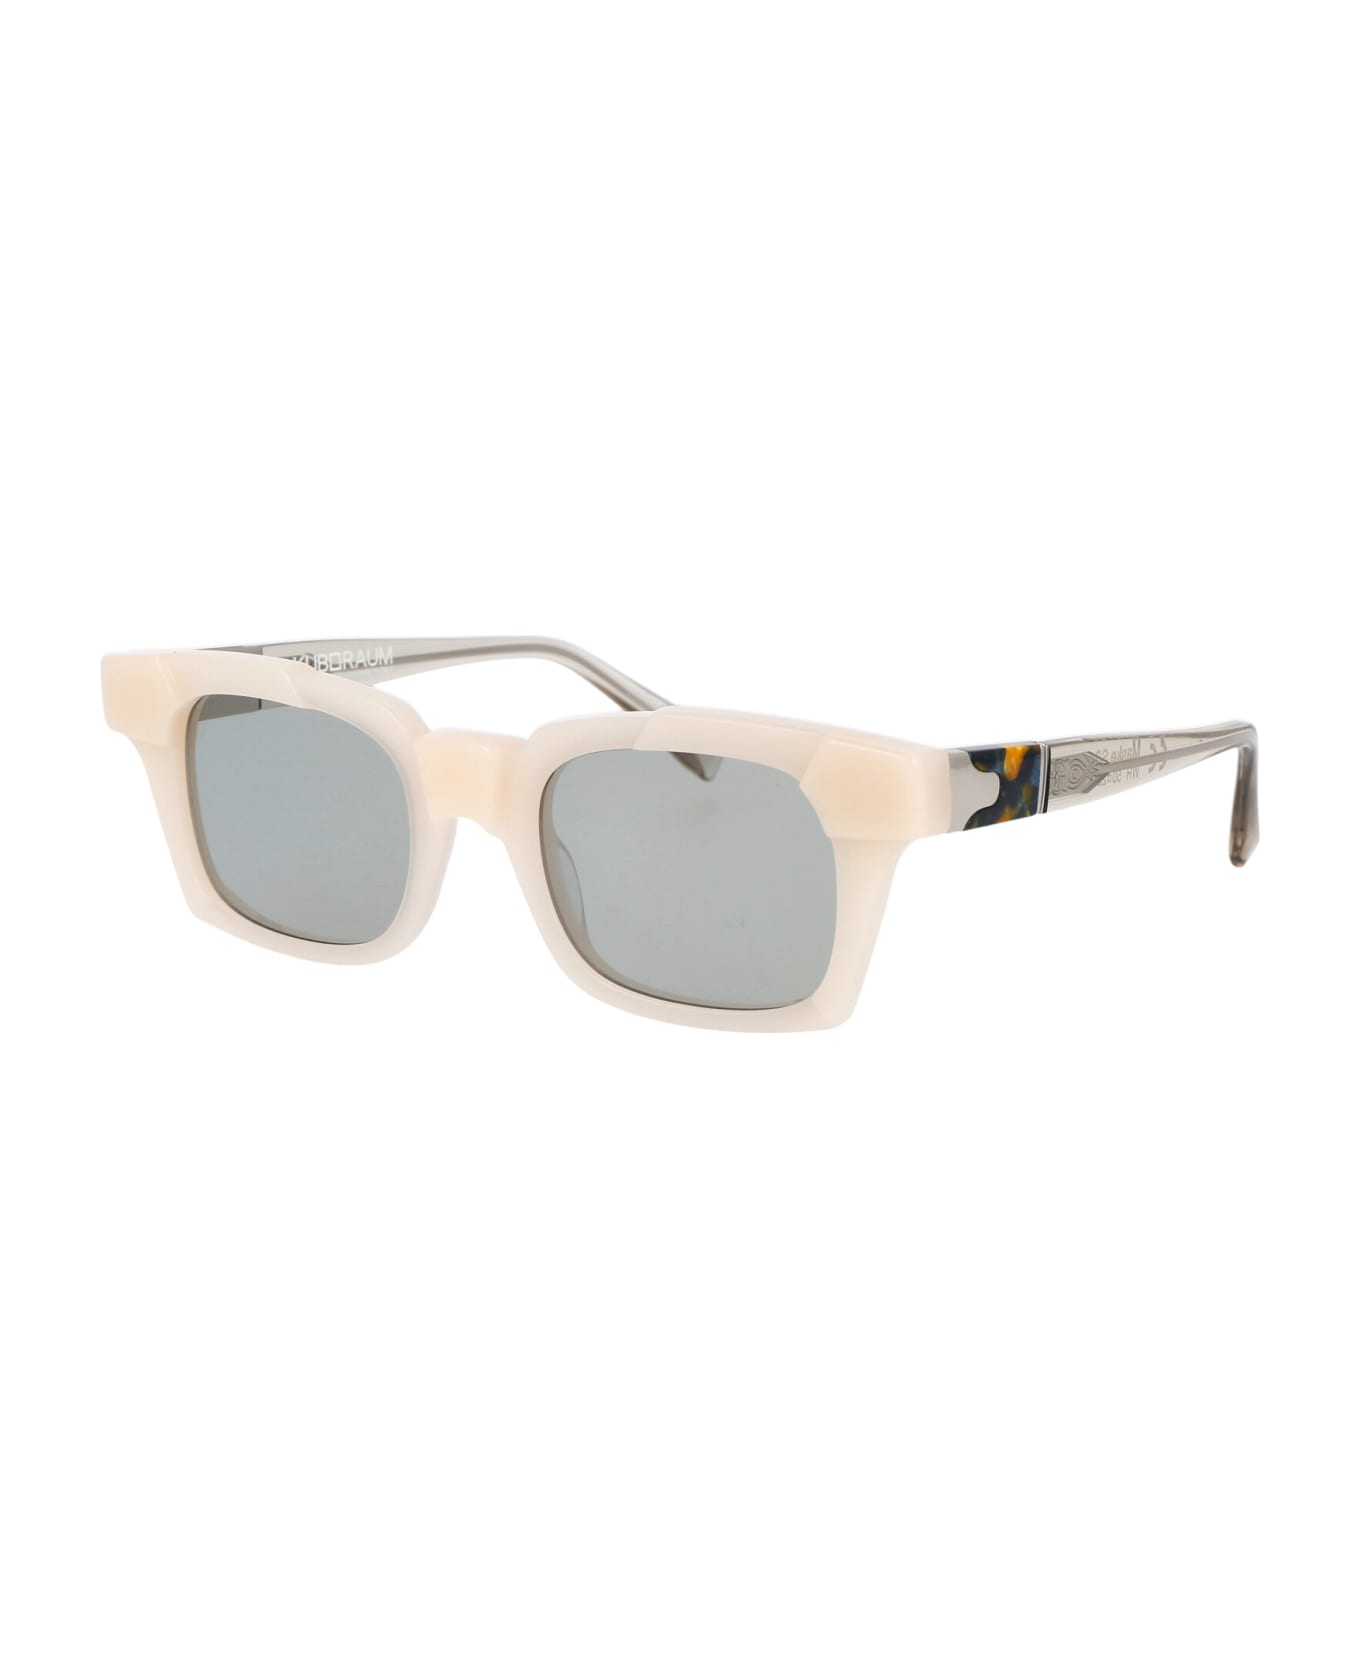 Kuboraum Maske S3 Sunglasses - WH grey1